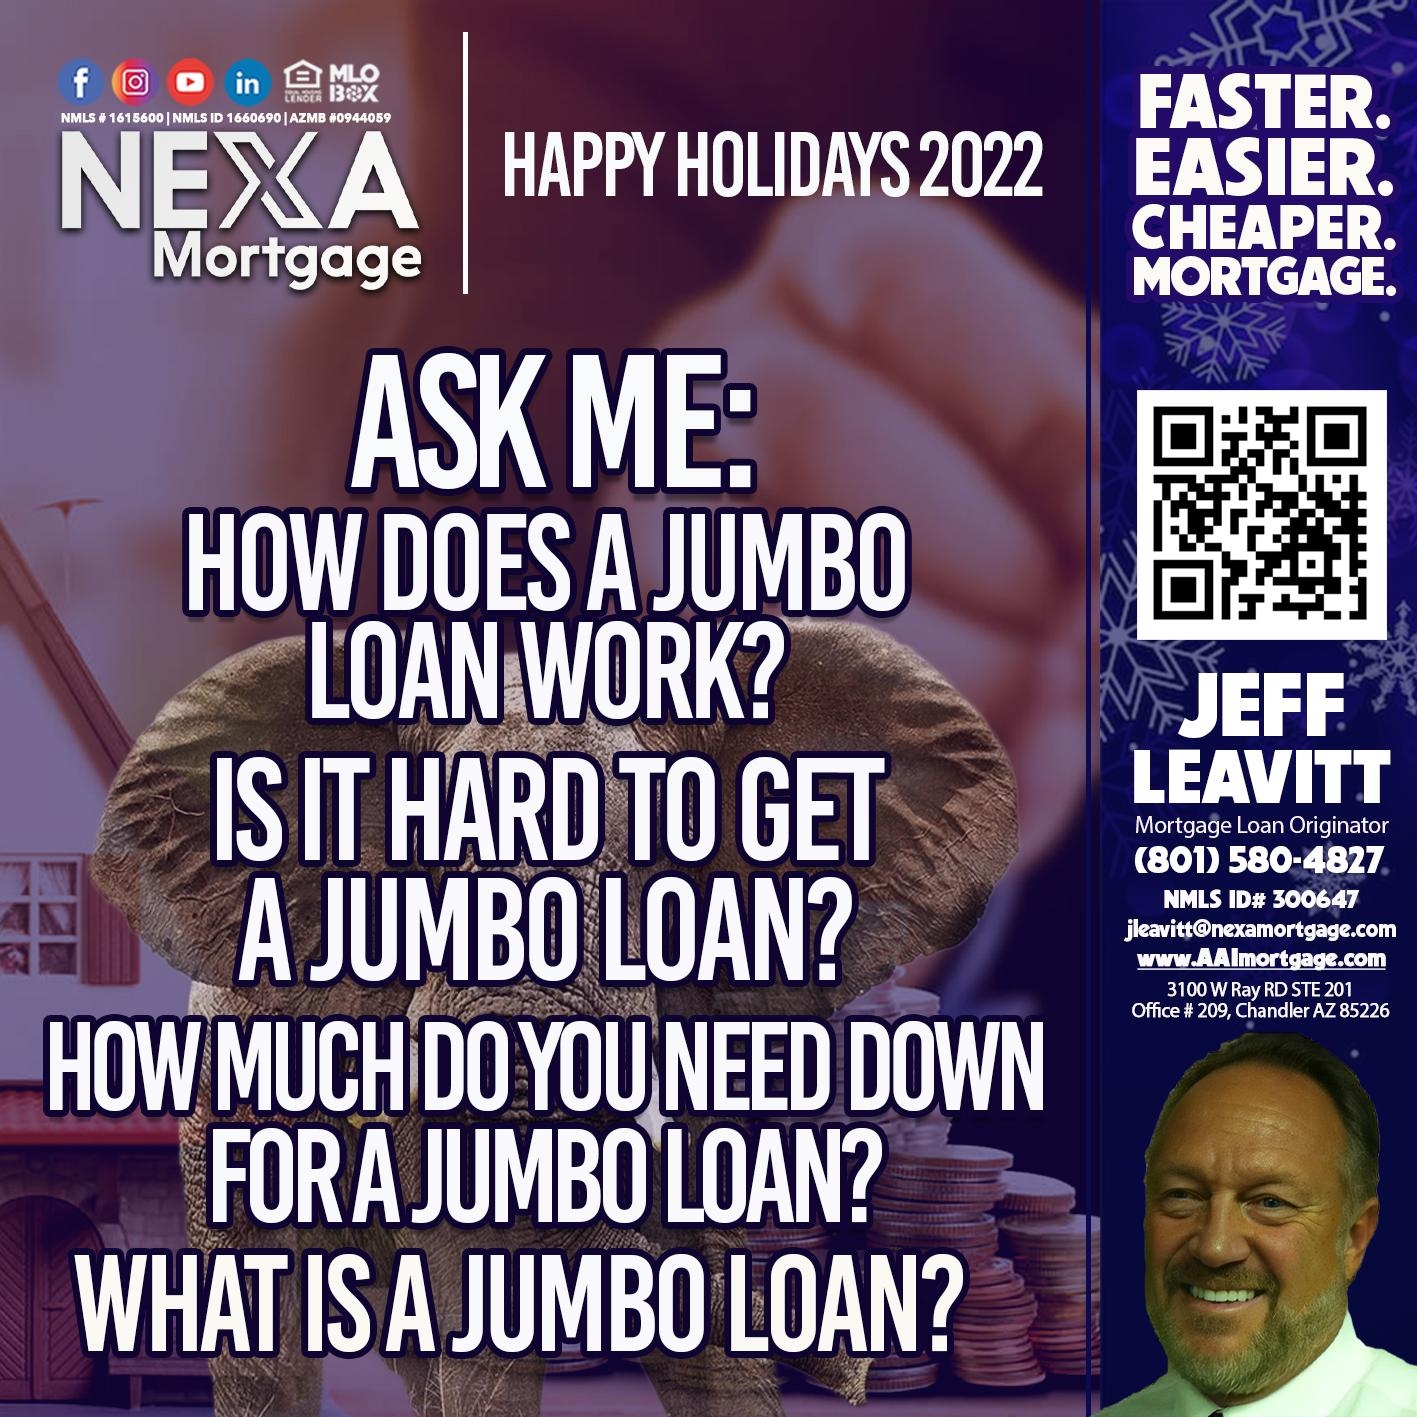 VA LOANS - Jeffery Leavitt -Mortgage Loan Originator